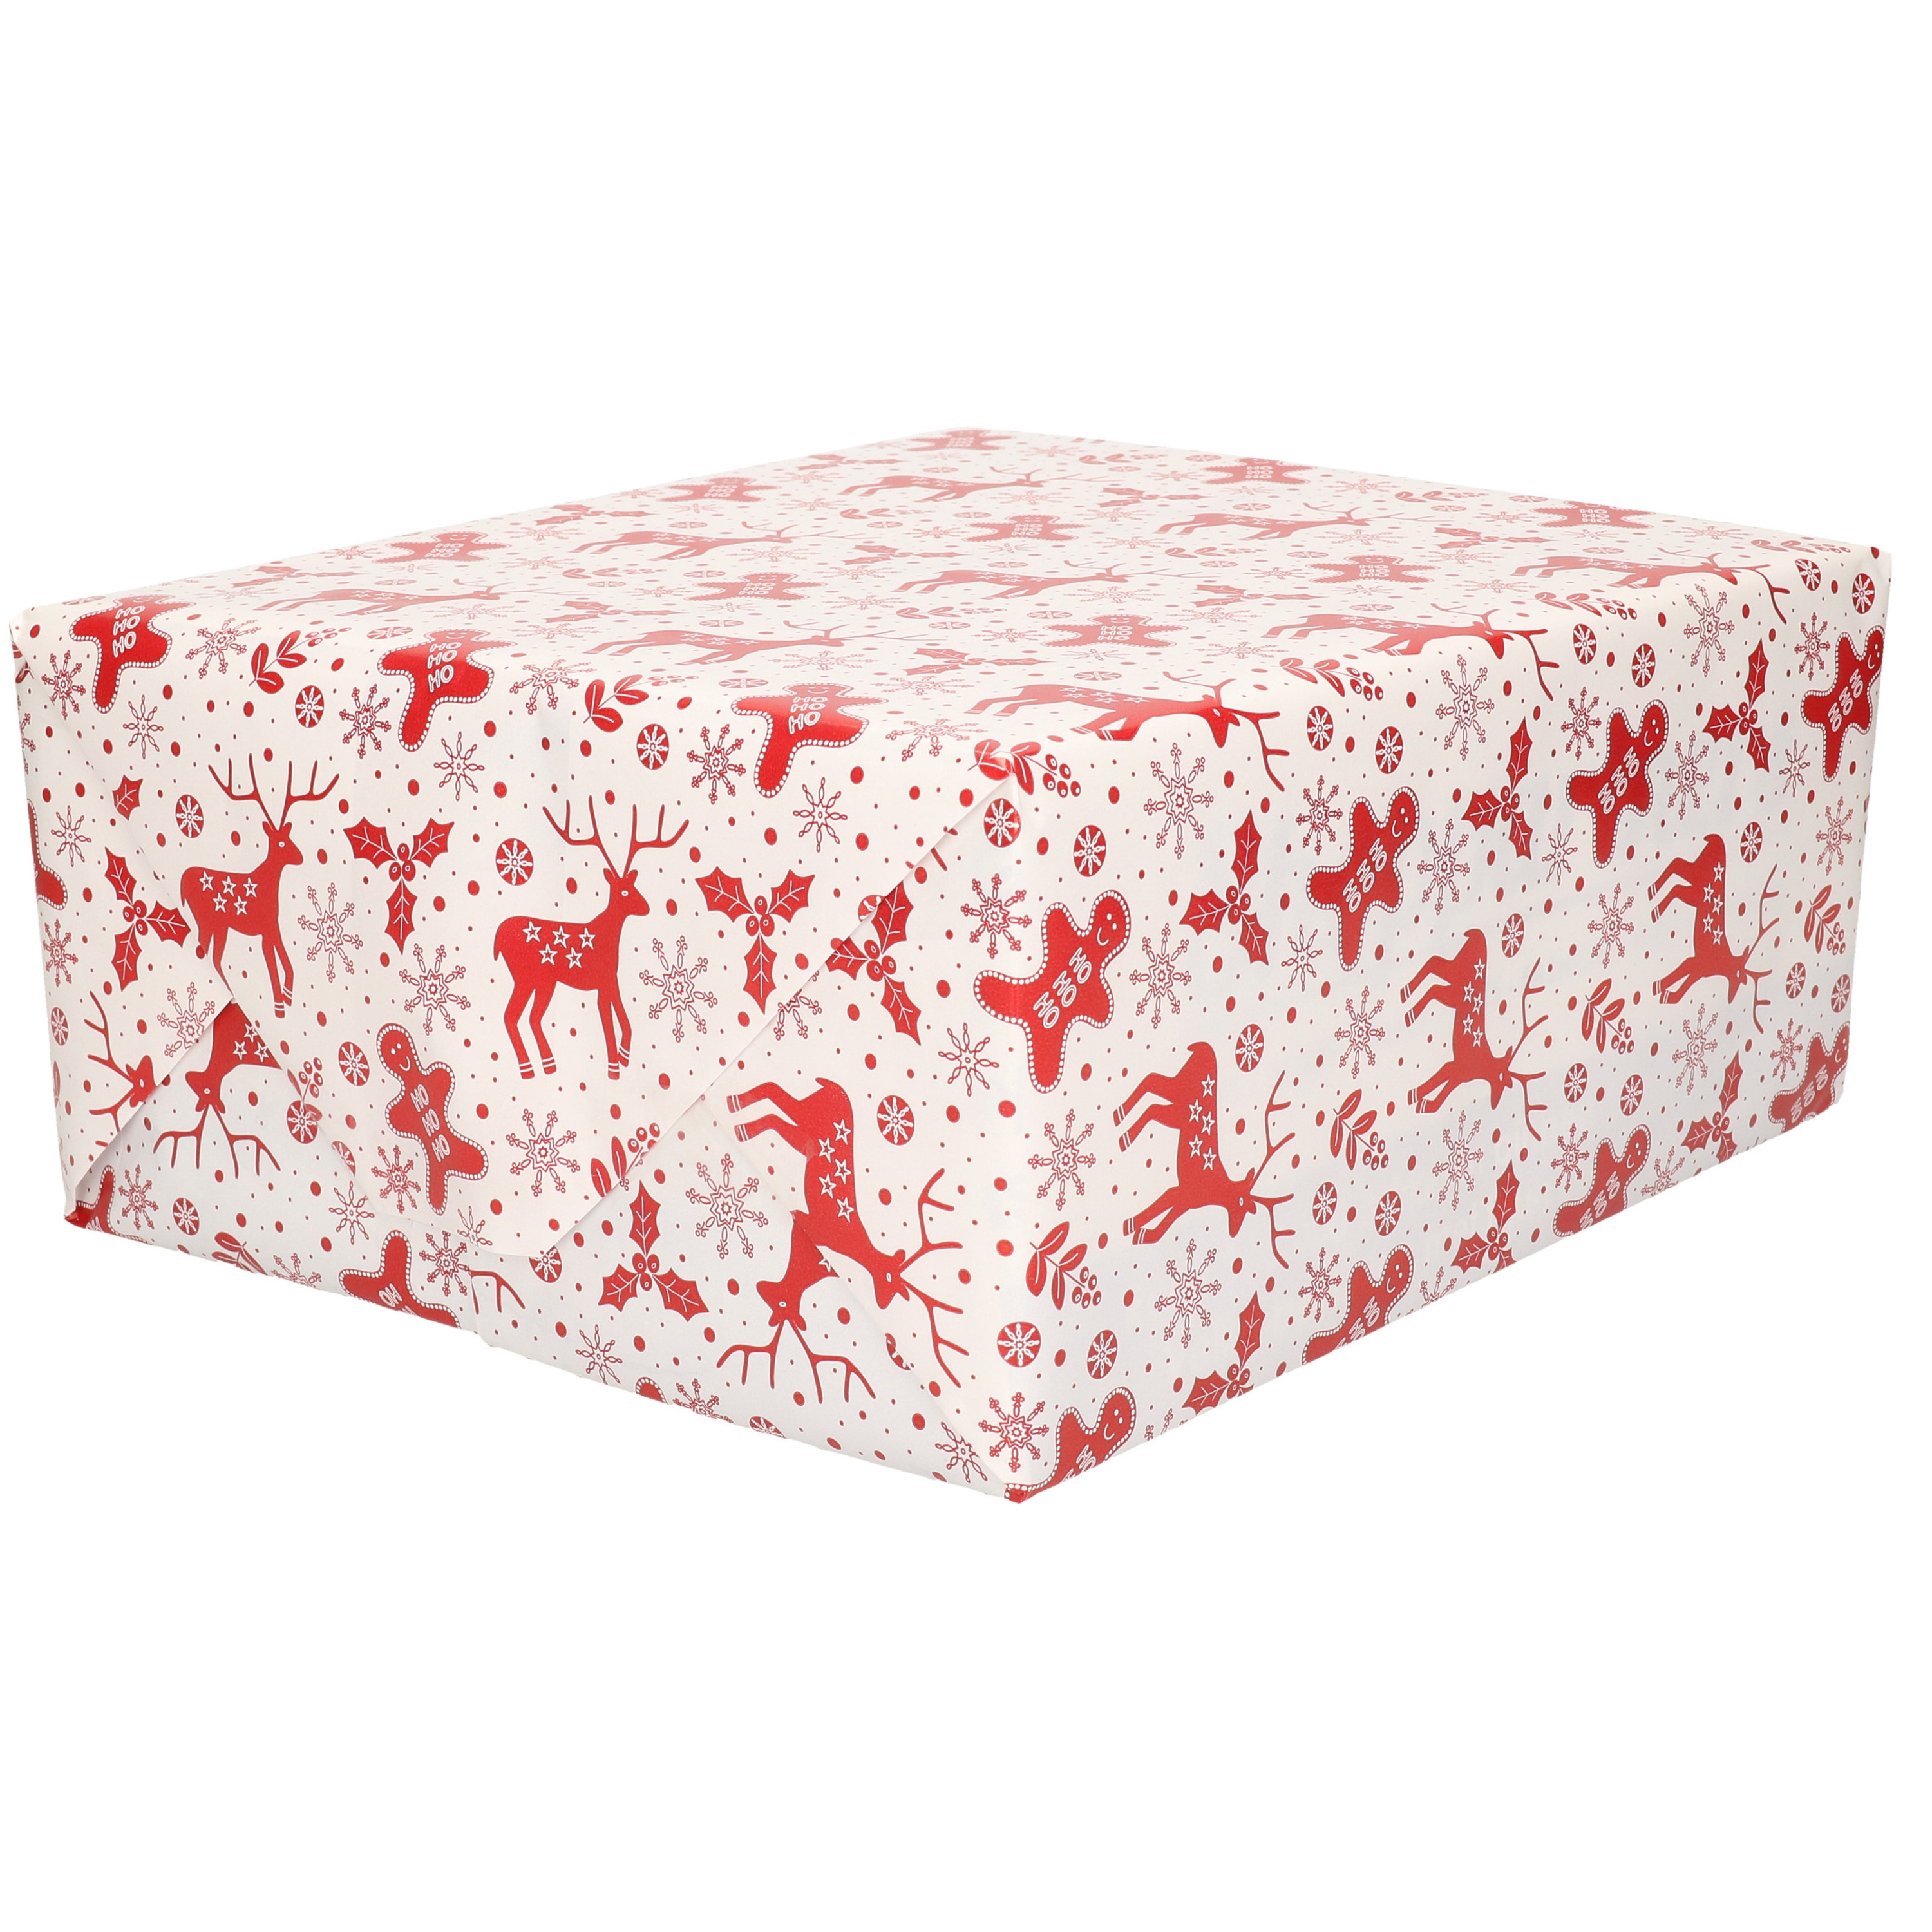 3x Rollen Kerst inpakpapier/cadeaupapier wit/rood 2,5 x 0,7 meter